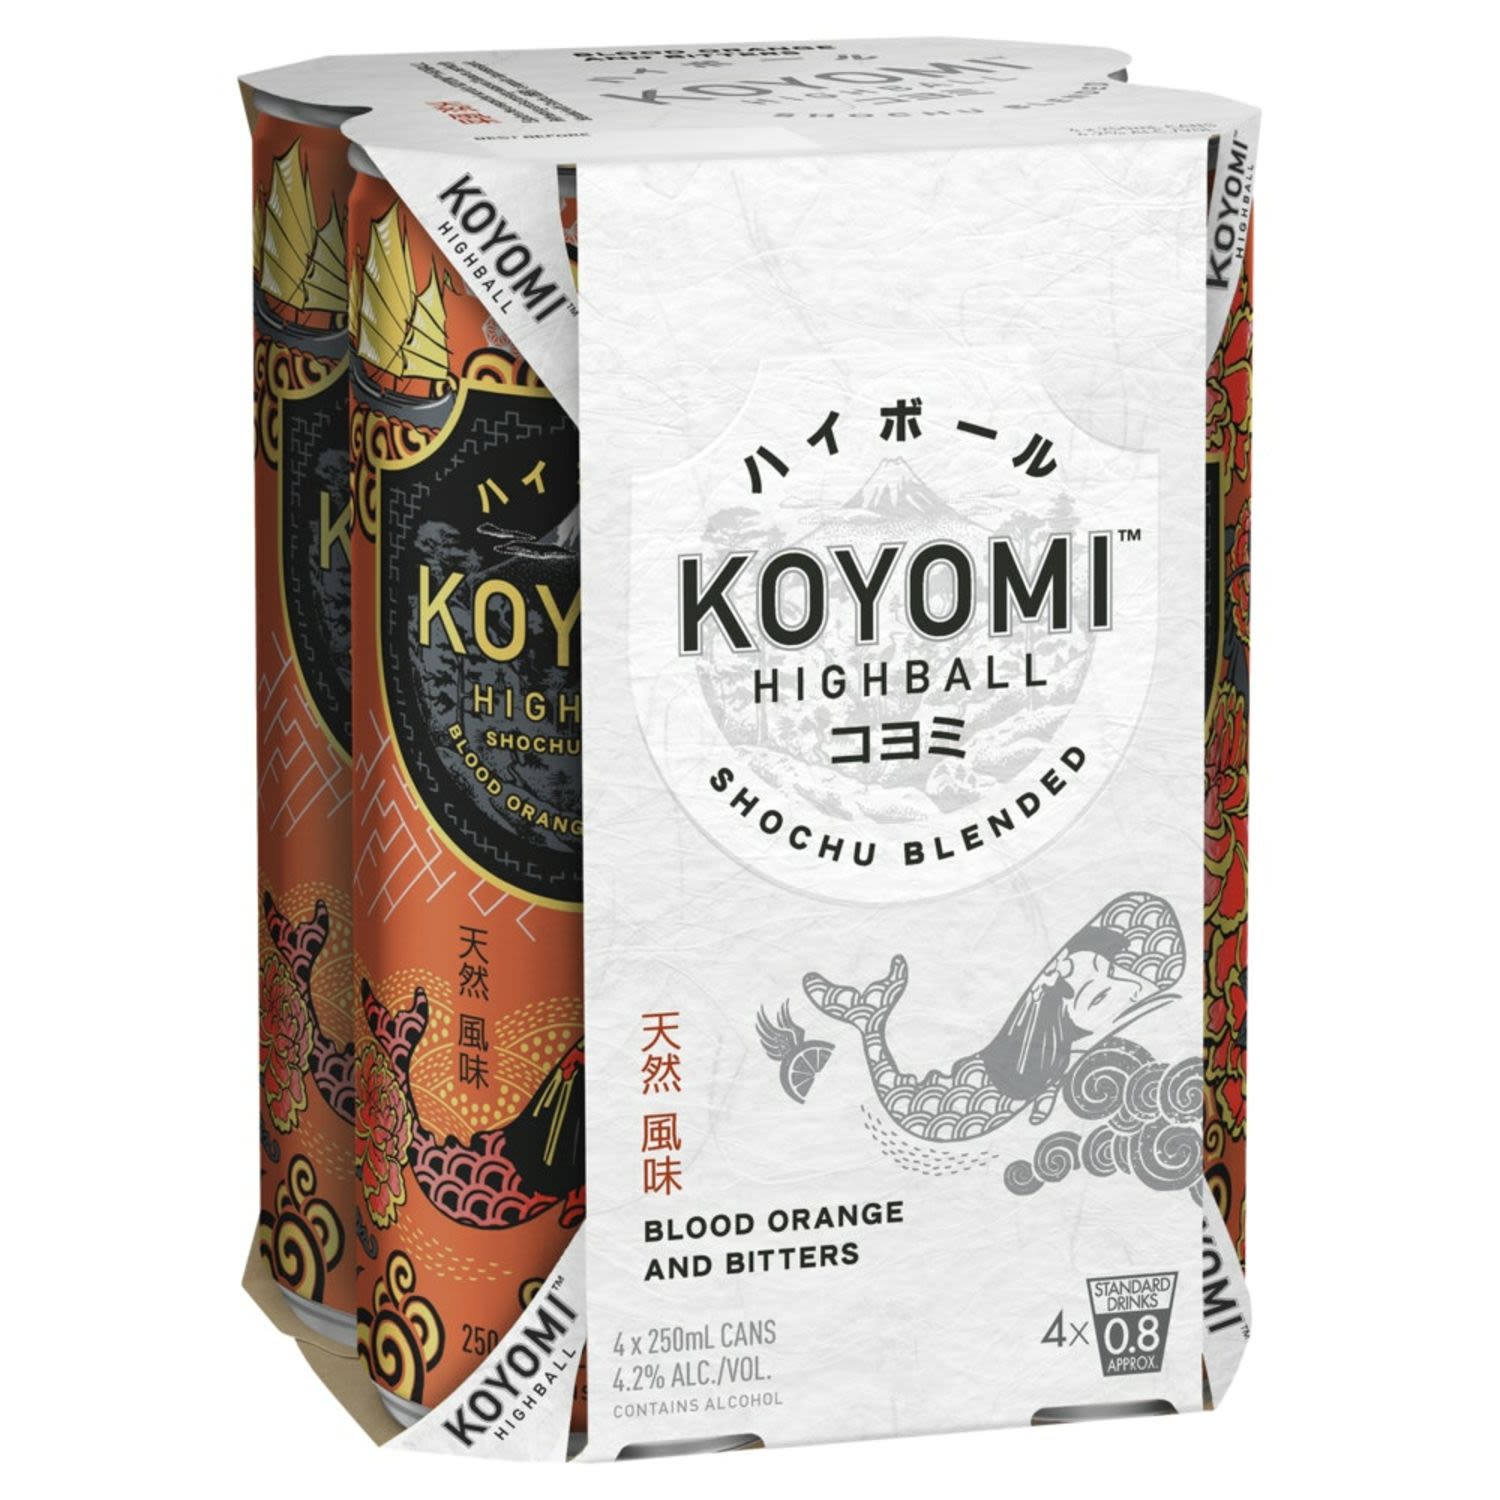 Koyomi Shochu Blood Orange and Bitters Highball 250mL 4 Pack